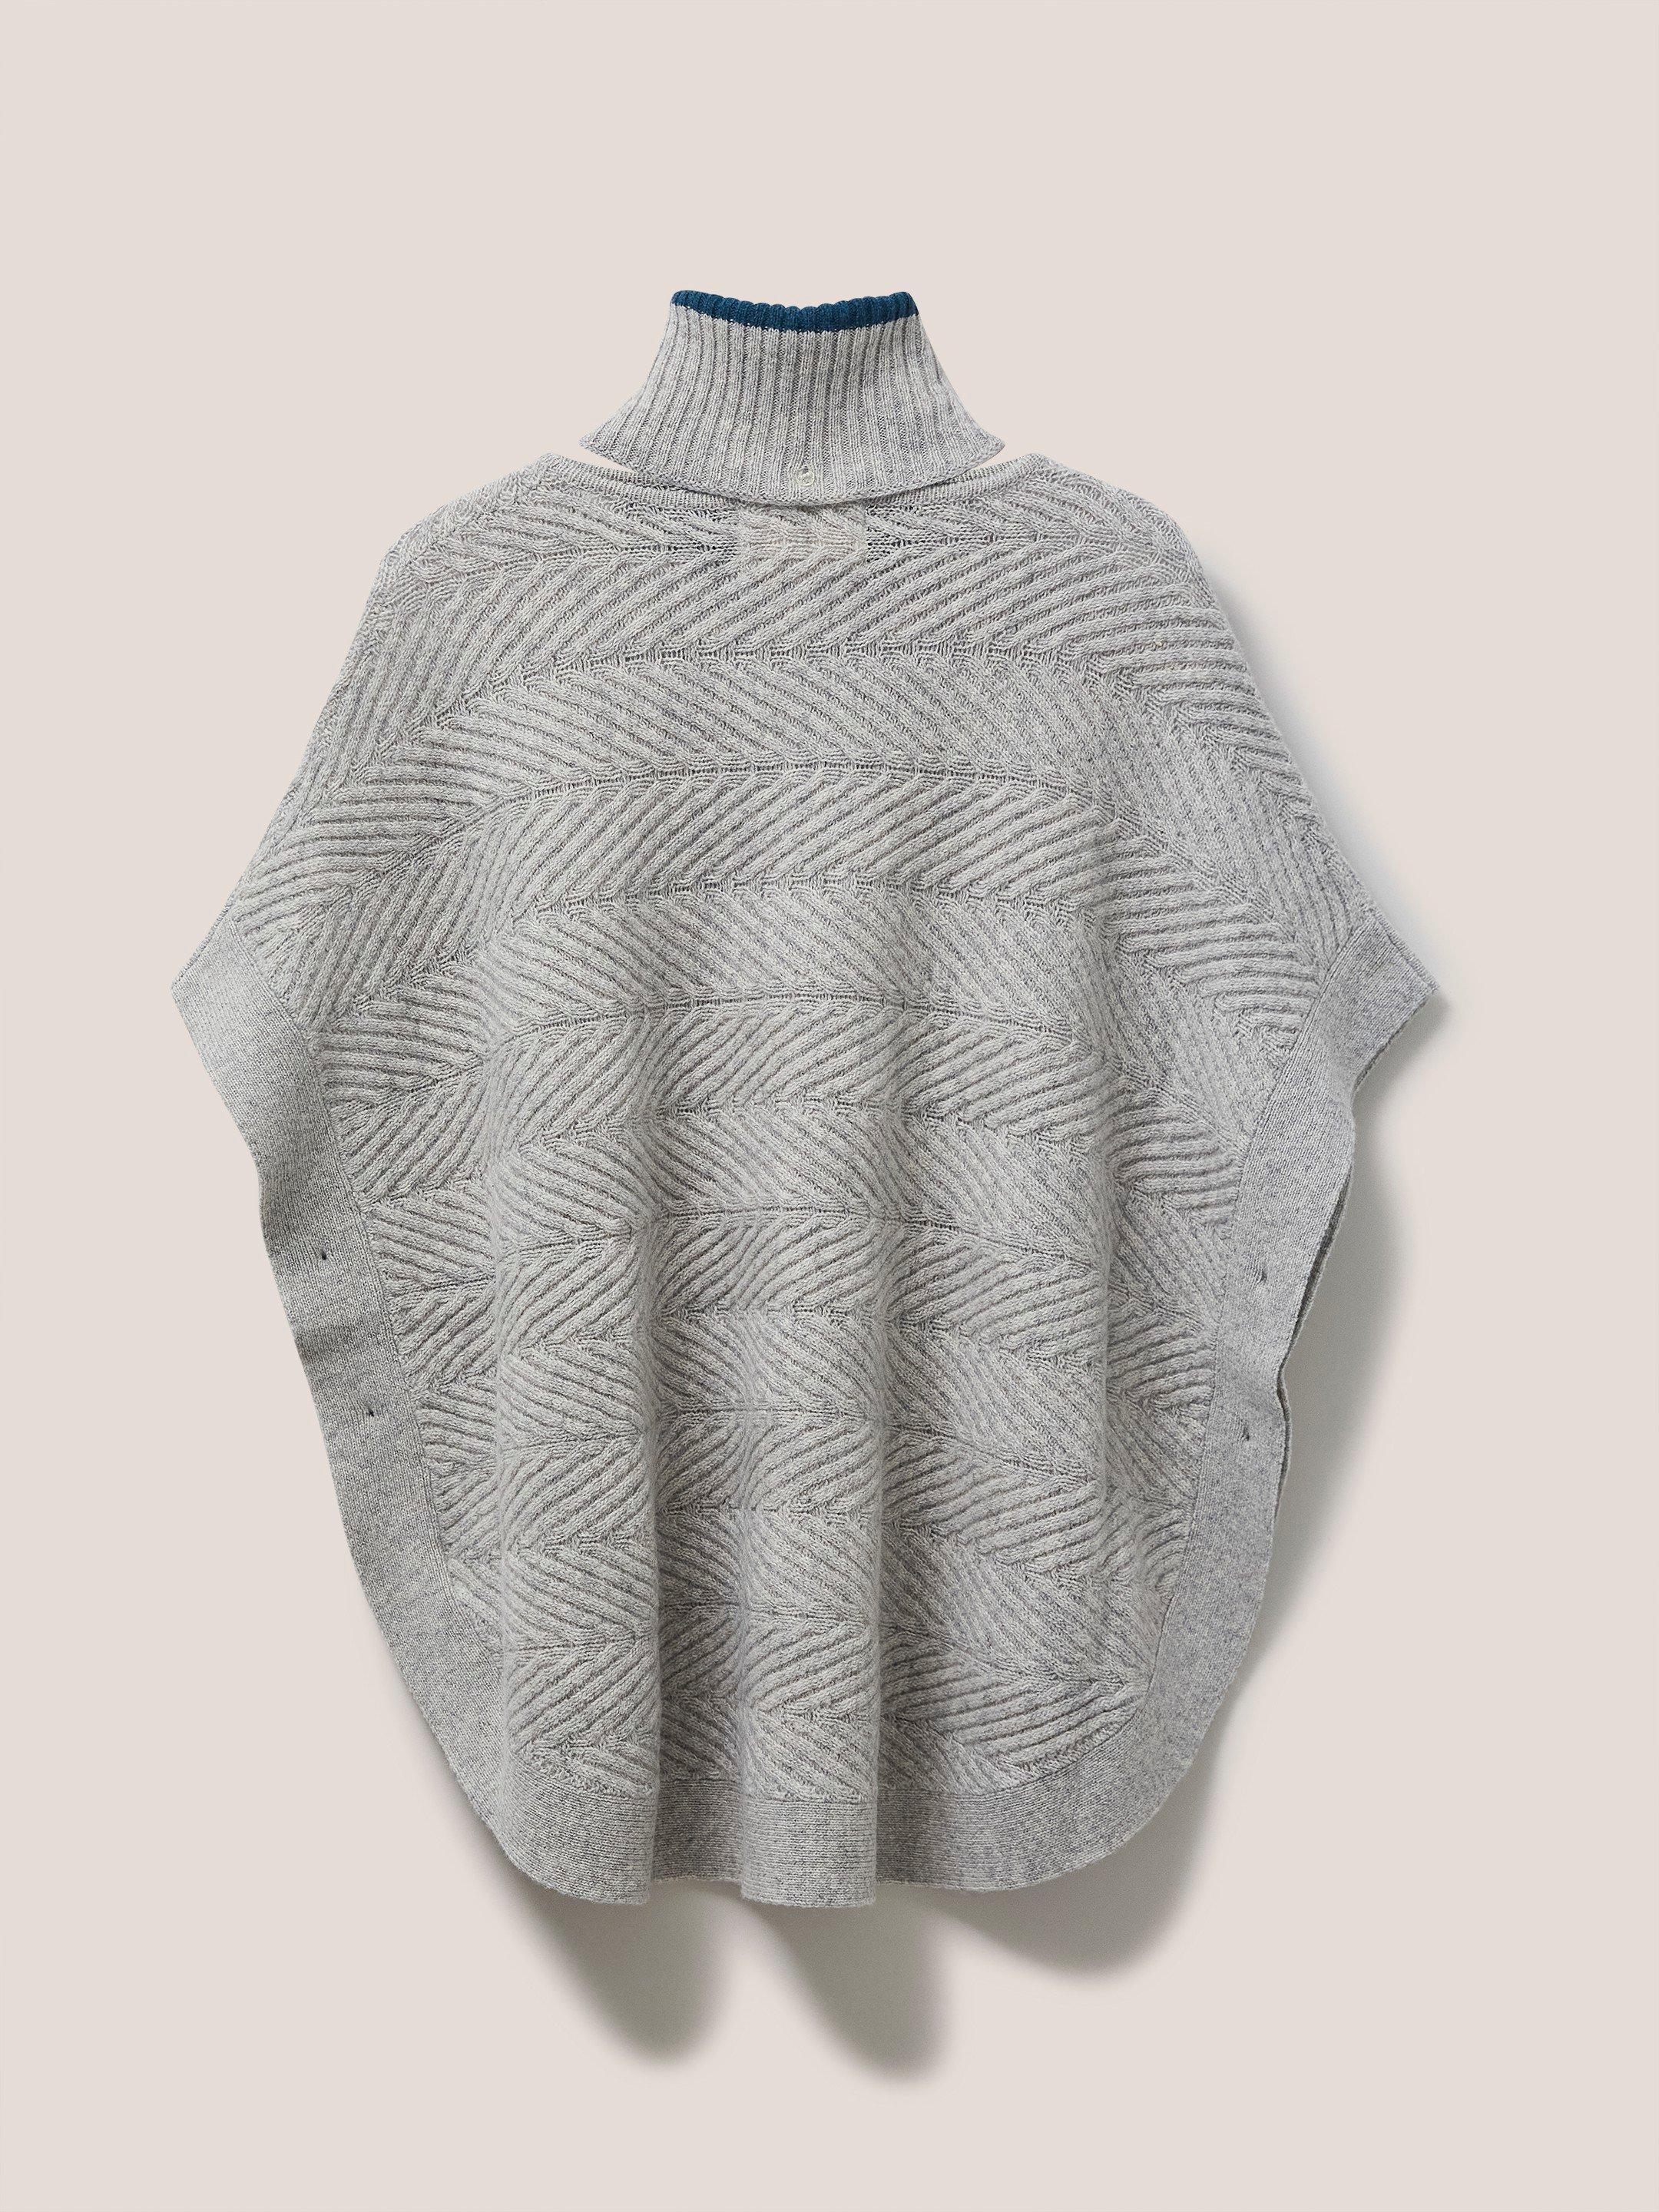 Fern Knitted Poncho in MID GREY - FLAT BACK